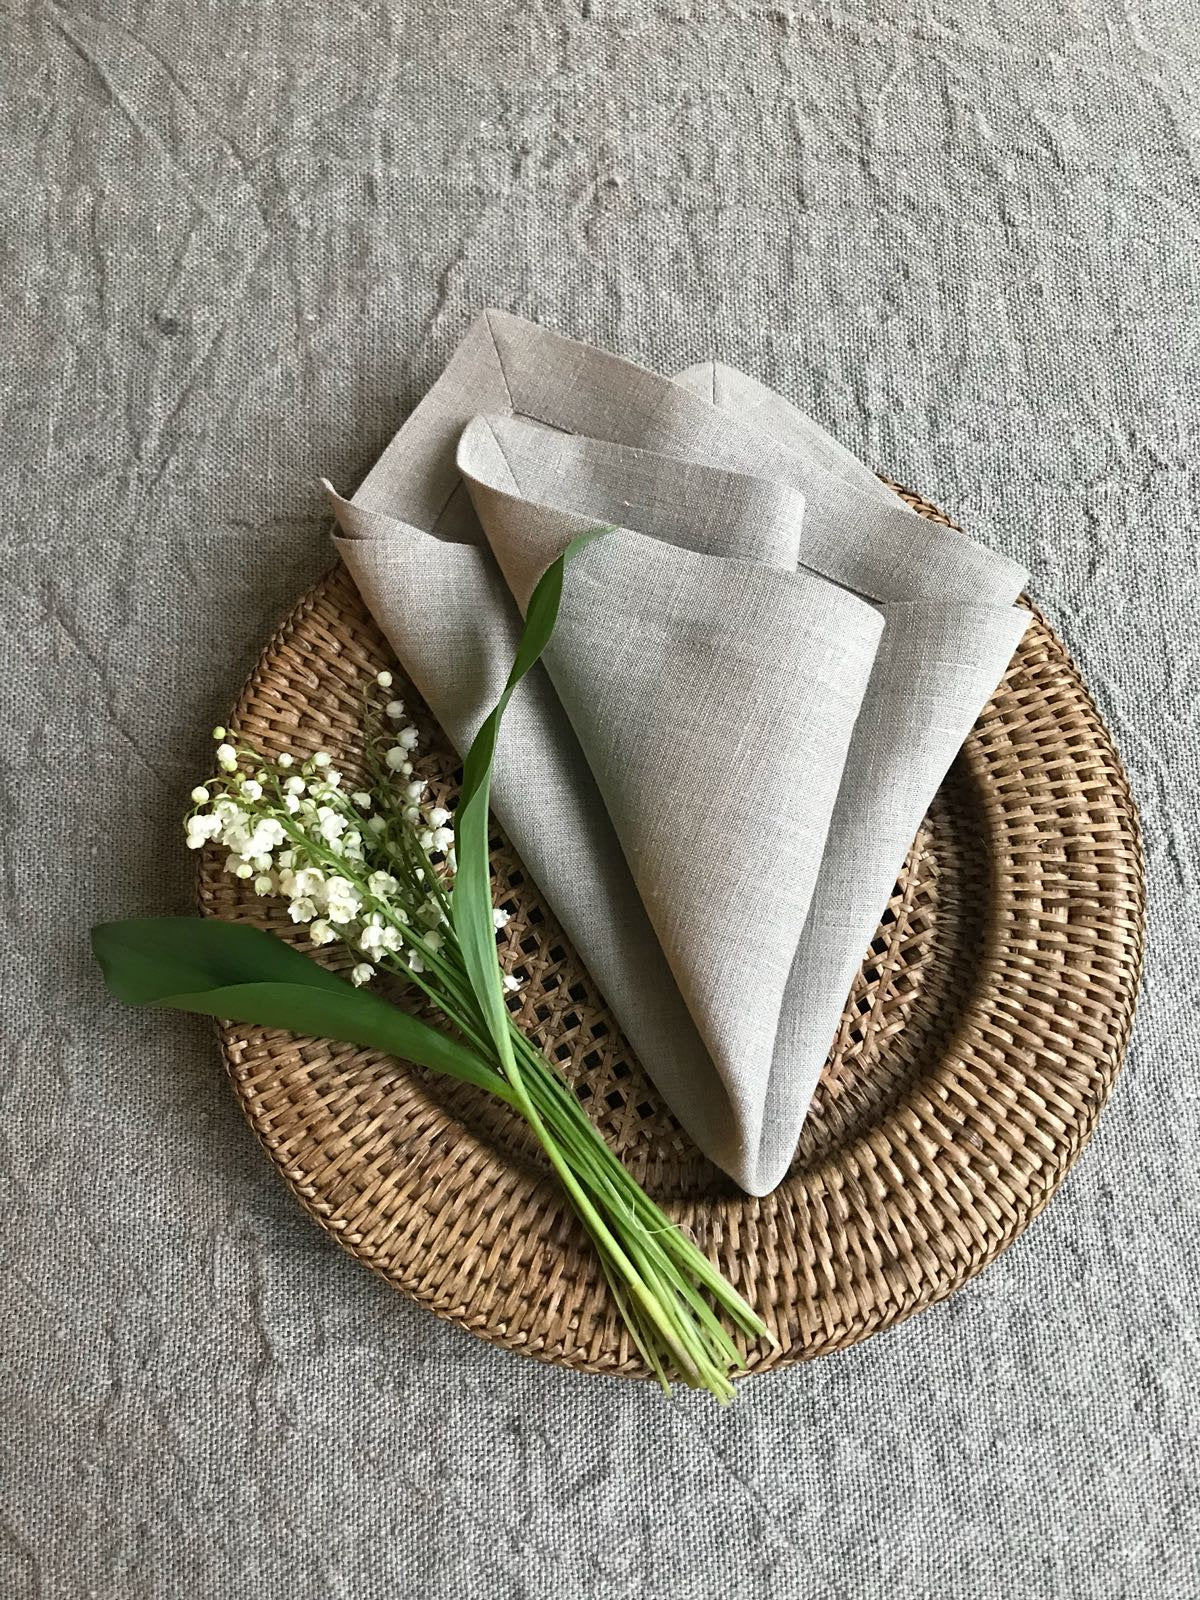 Linen Napkins, Set of 8 natural taupe linen napkins - Linenbee